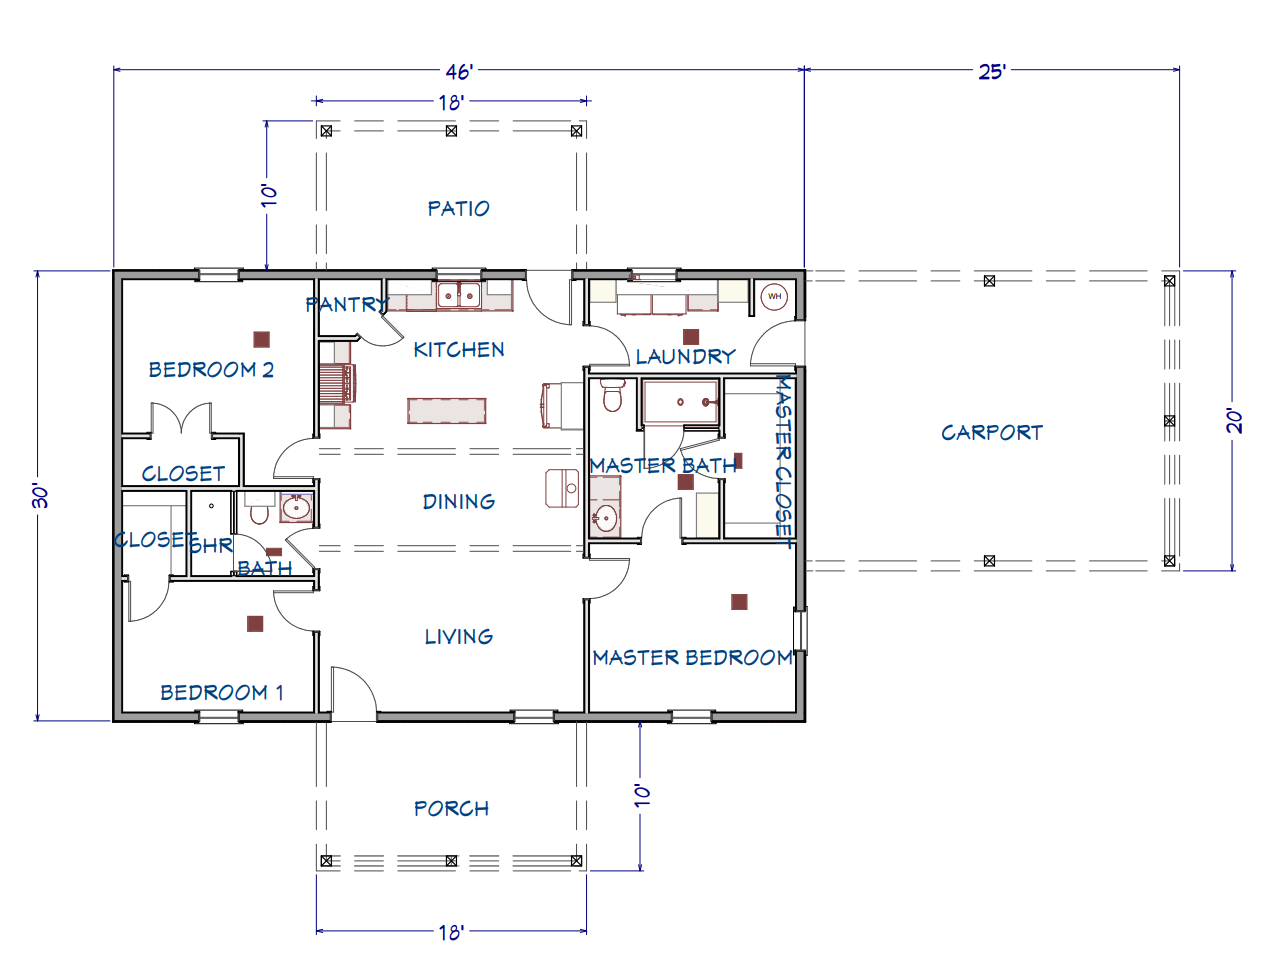 LP-3205 Starnes Barndominium House Plan